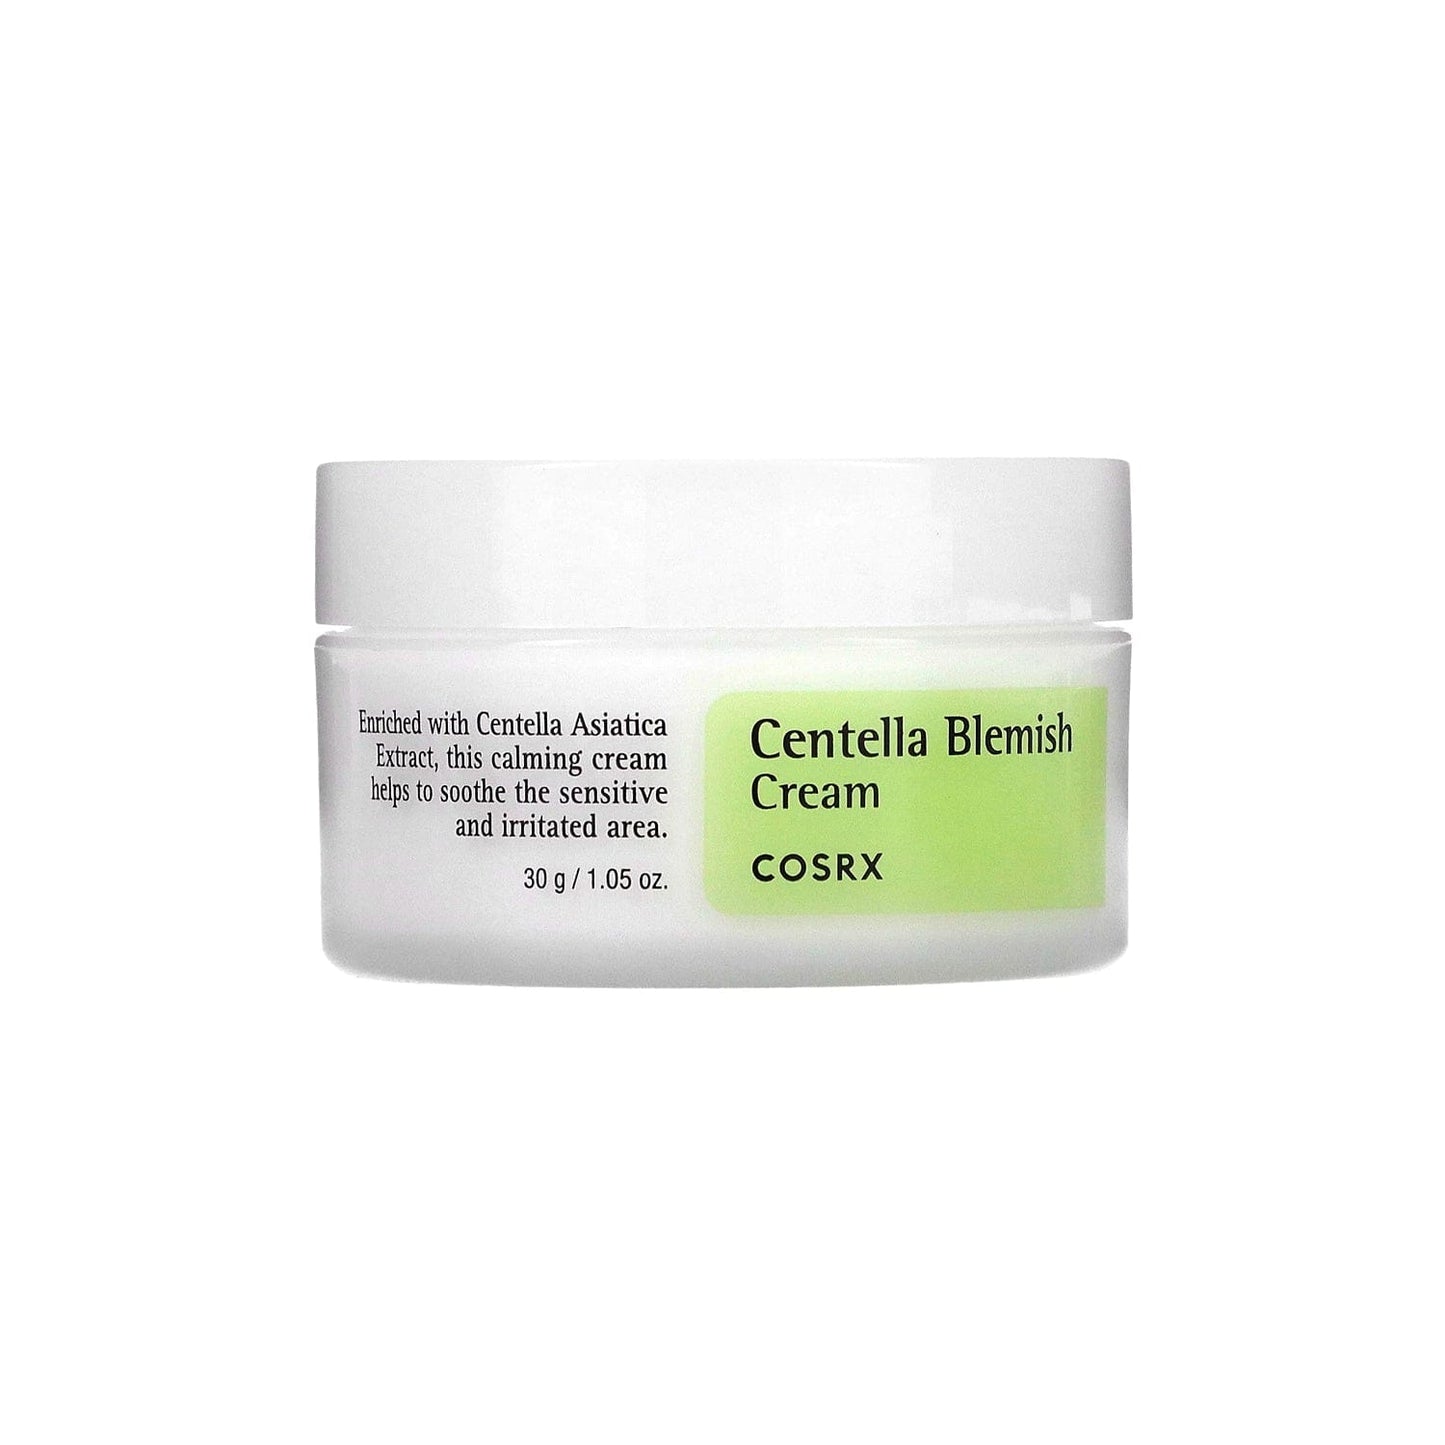 COSRX - "Centella Blemish Cream" anti-blemish face cream - 30ml - COSRX - Ethni Beauty Market